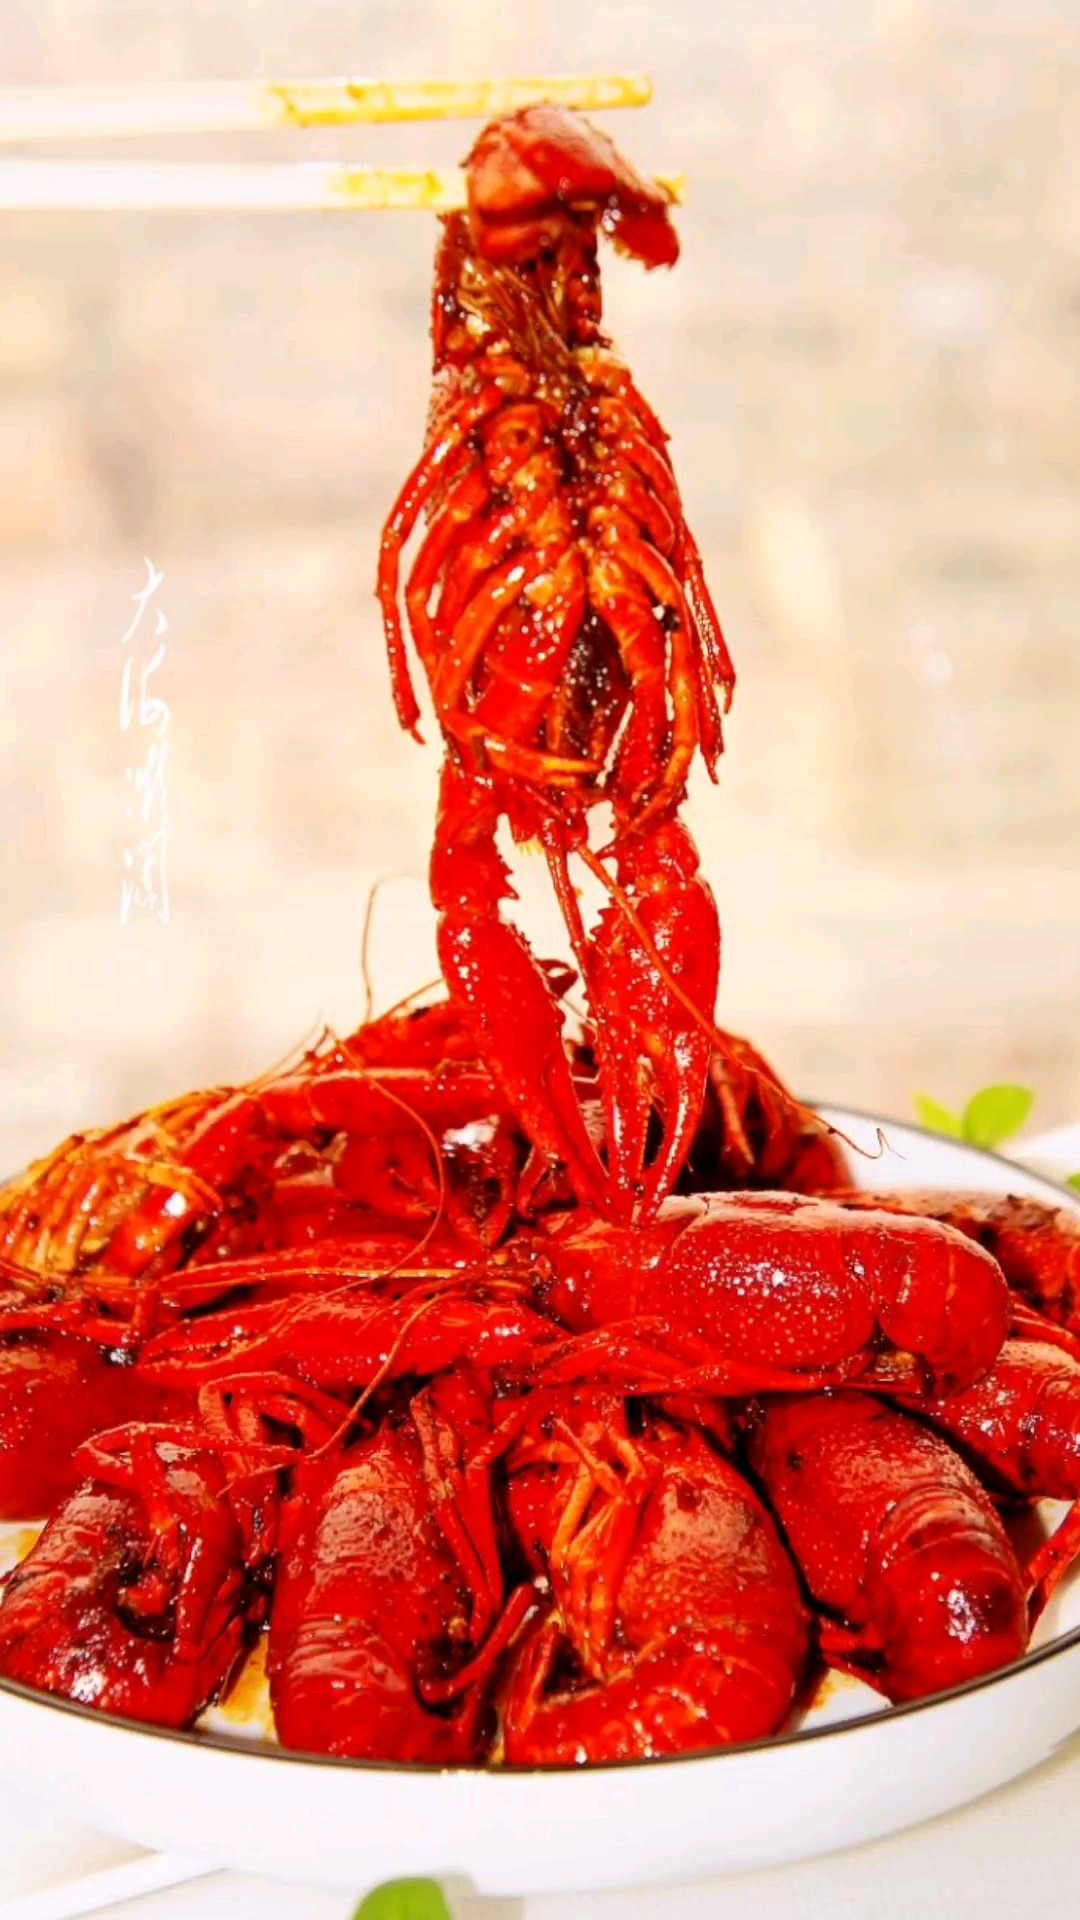 Spicy Crayfish, Addicted to One Bite recipe